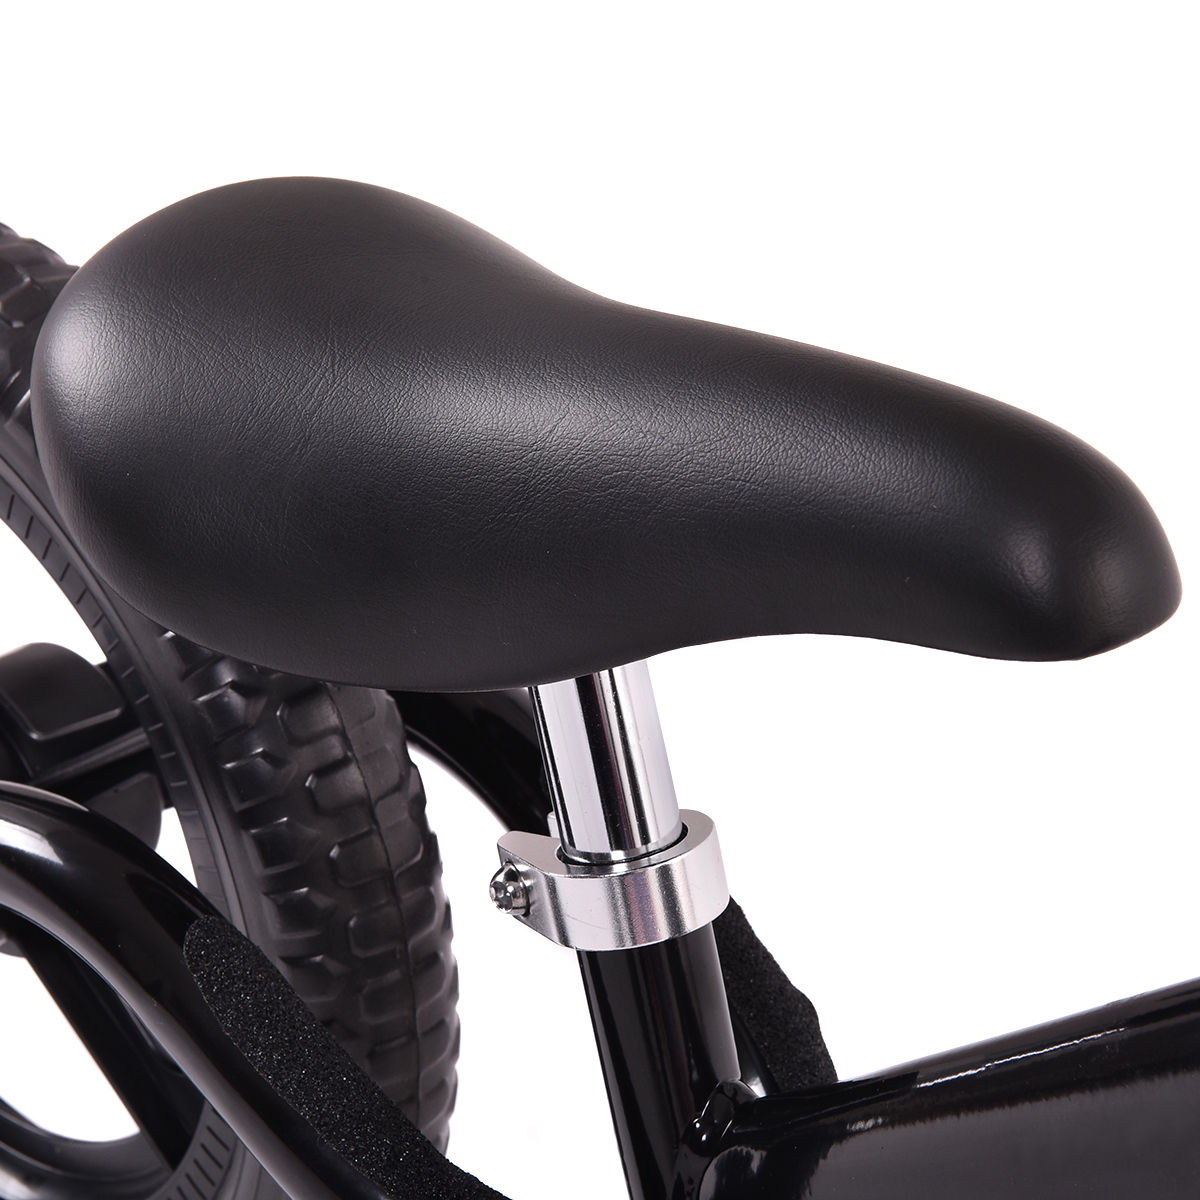 Goplus 12'' Balance Bike Classic Kids No-Pedal Learn To Ride Pre Bike w/ Adjustable Seat, Black - image 5 of 8